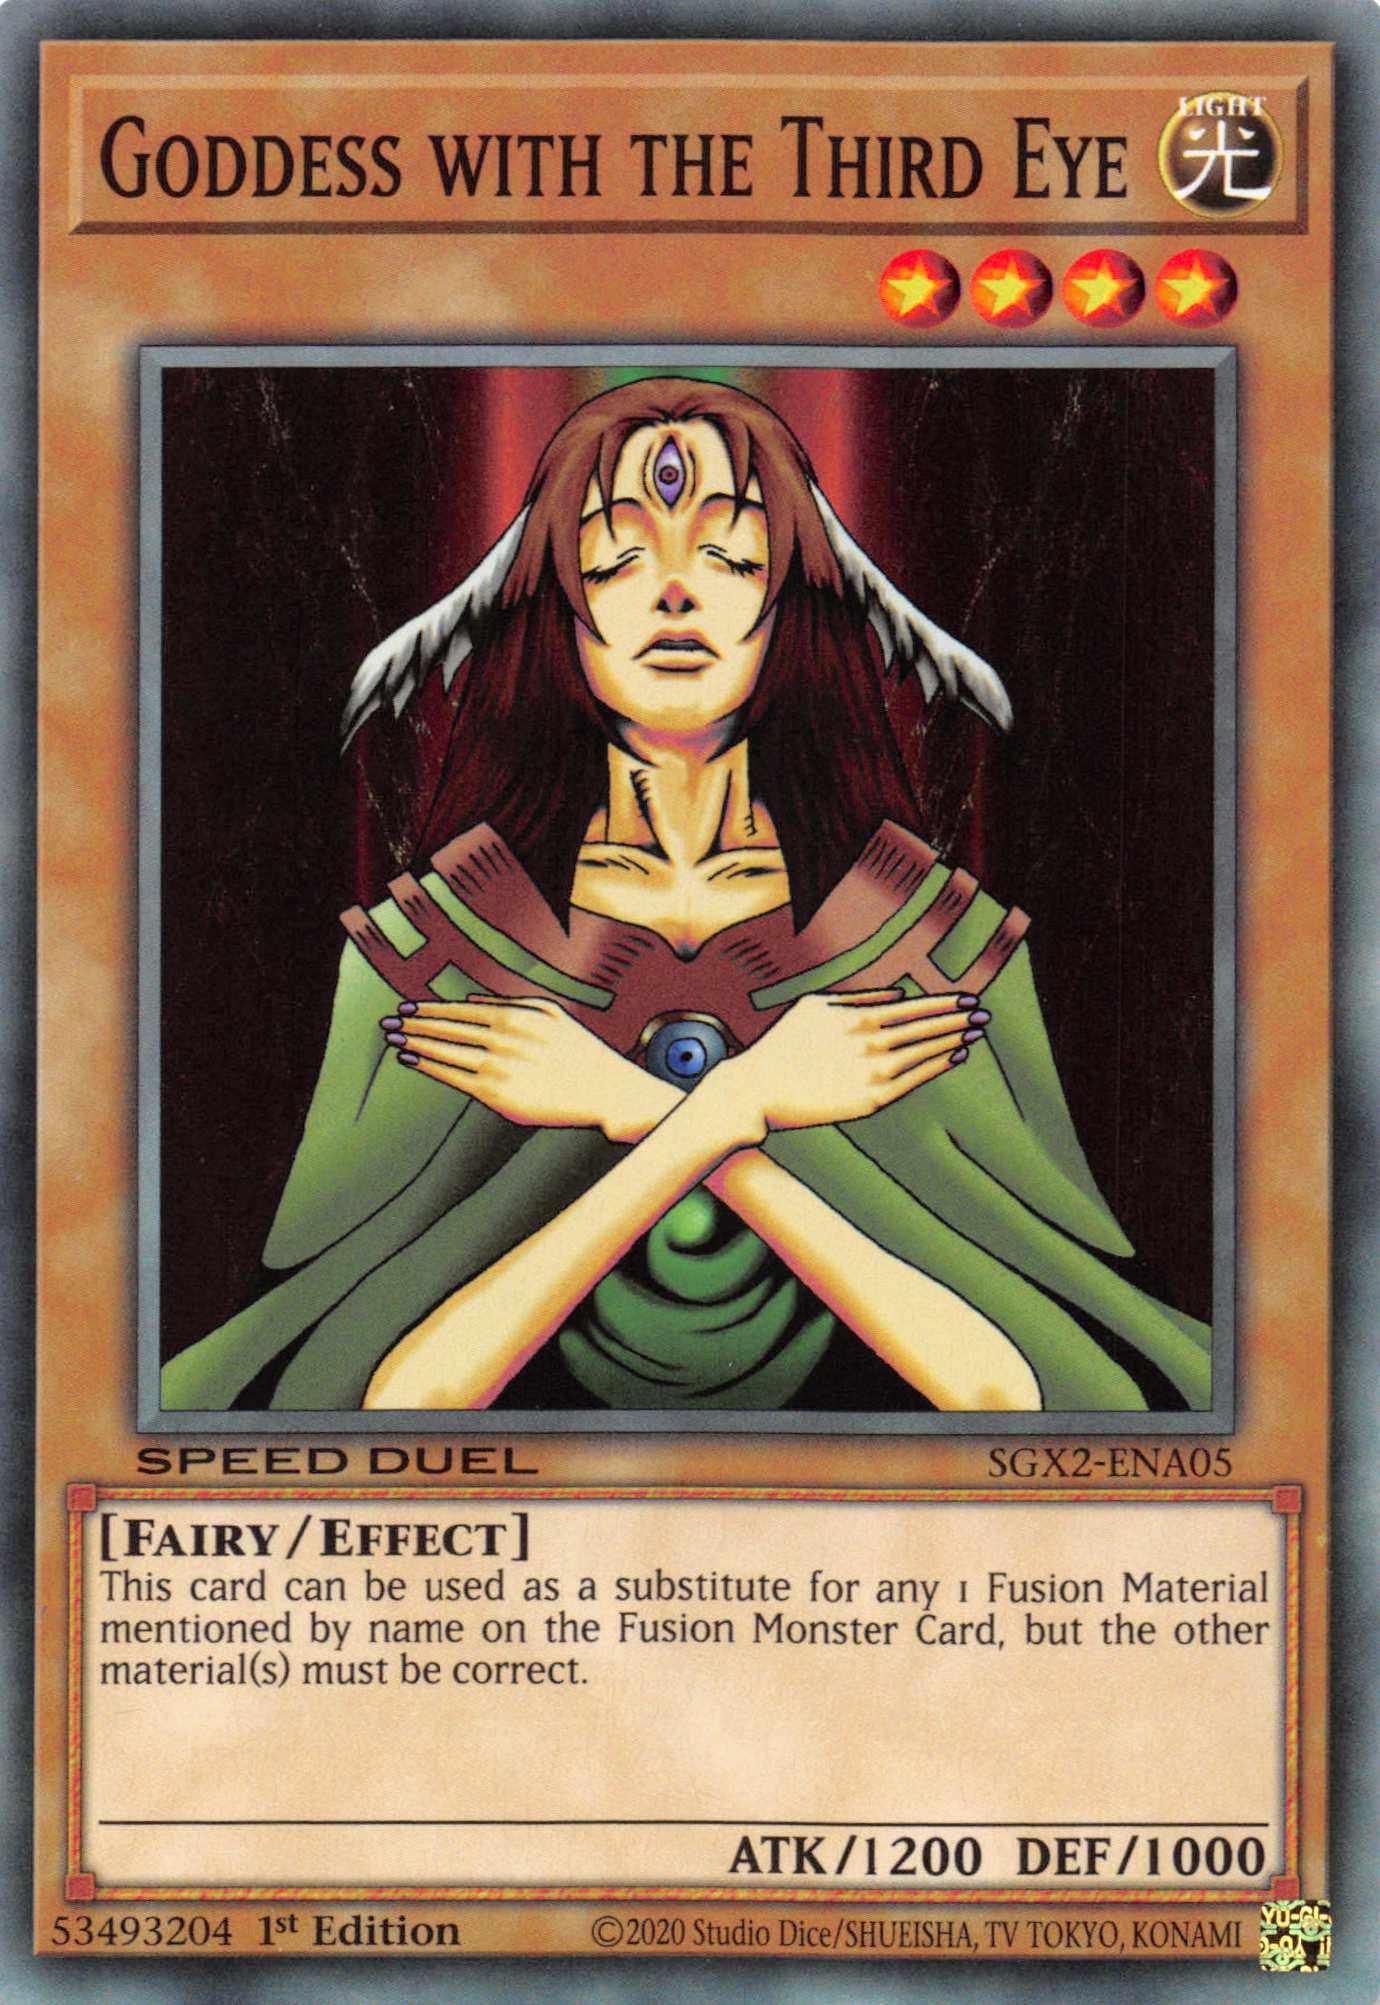 Goddess with the Third Eye [SGX2-ENA05] Common